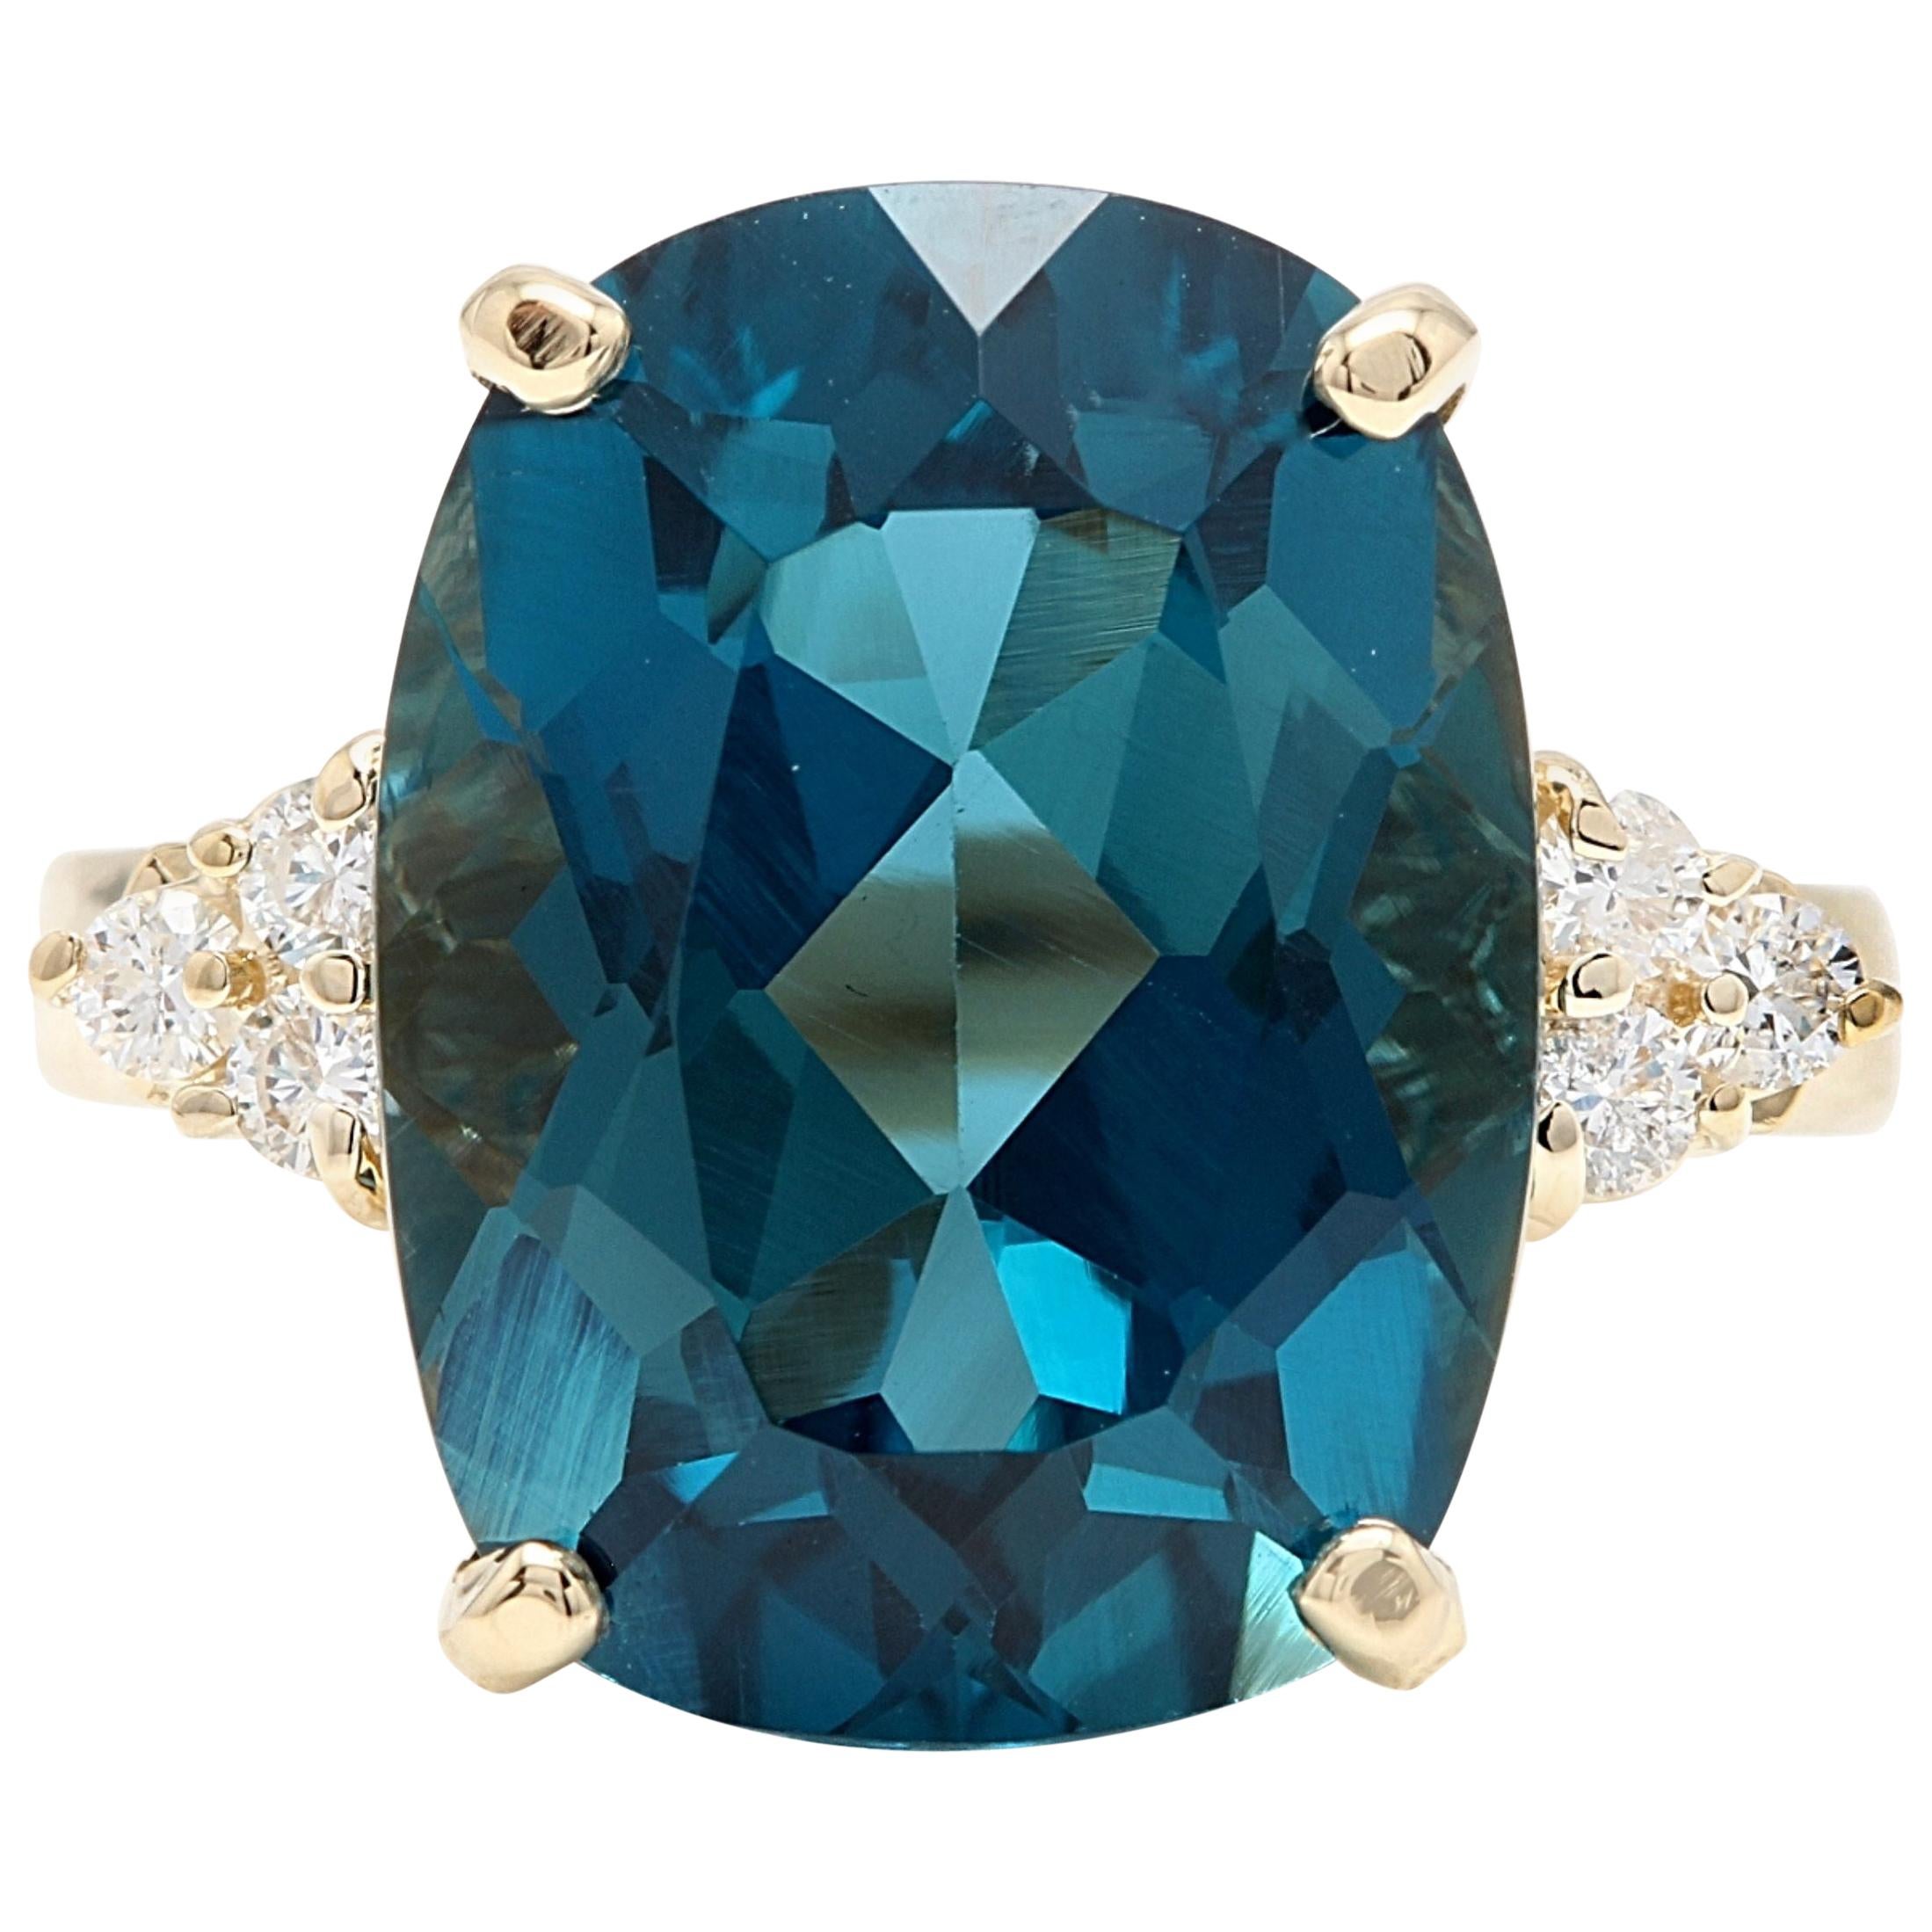 9.85 Carat Natural Impressive London Blue Topaz and Diamond 14k Yellow Gold Ring